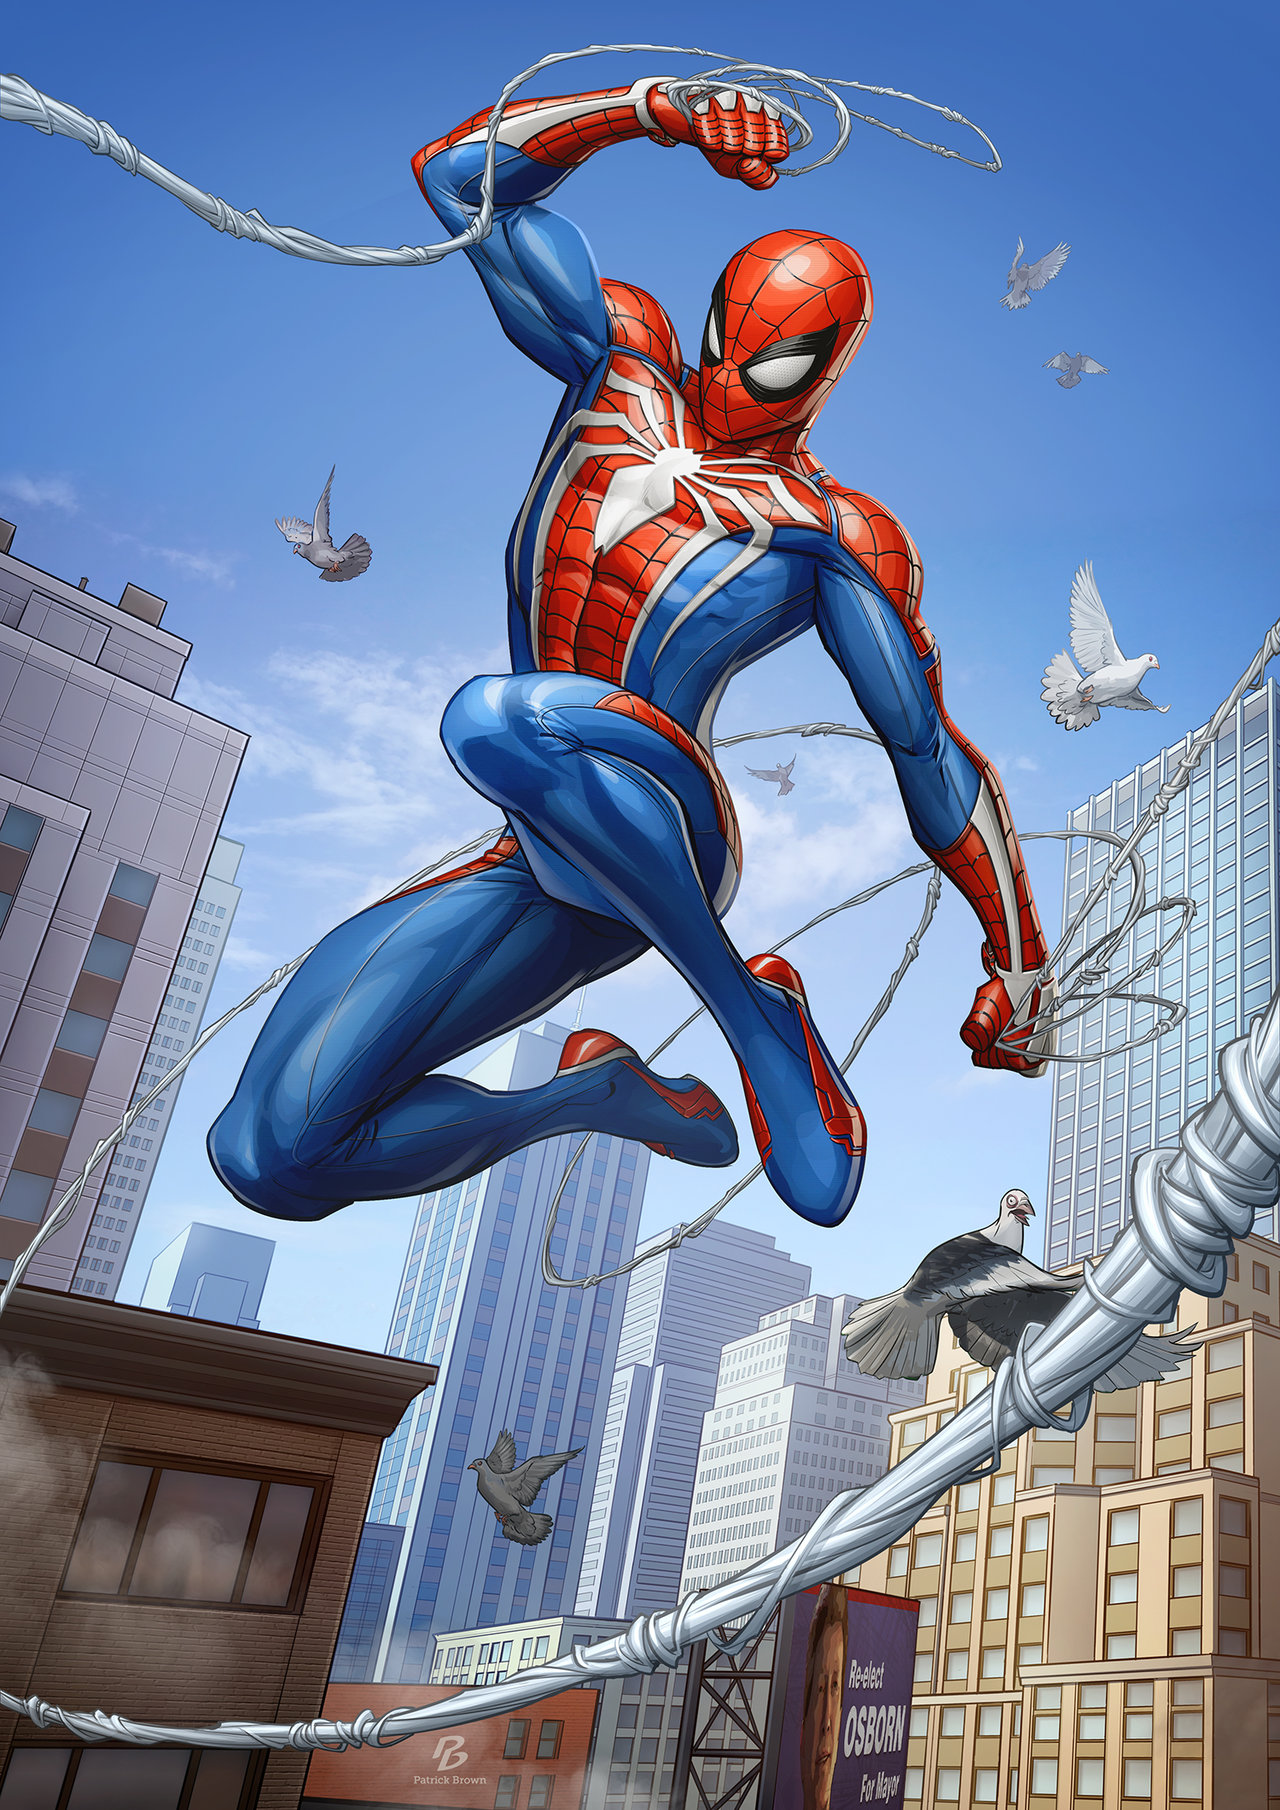 the amazing spider man 1 full movie online free no download